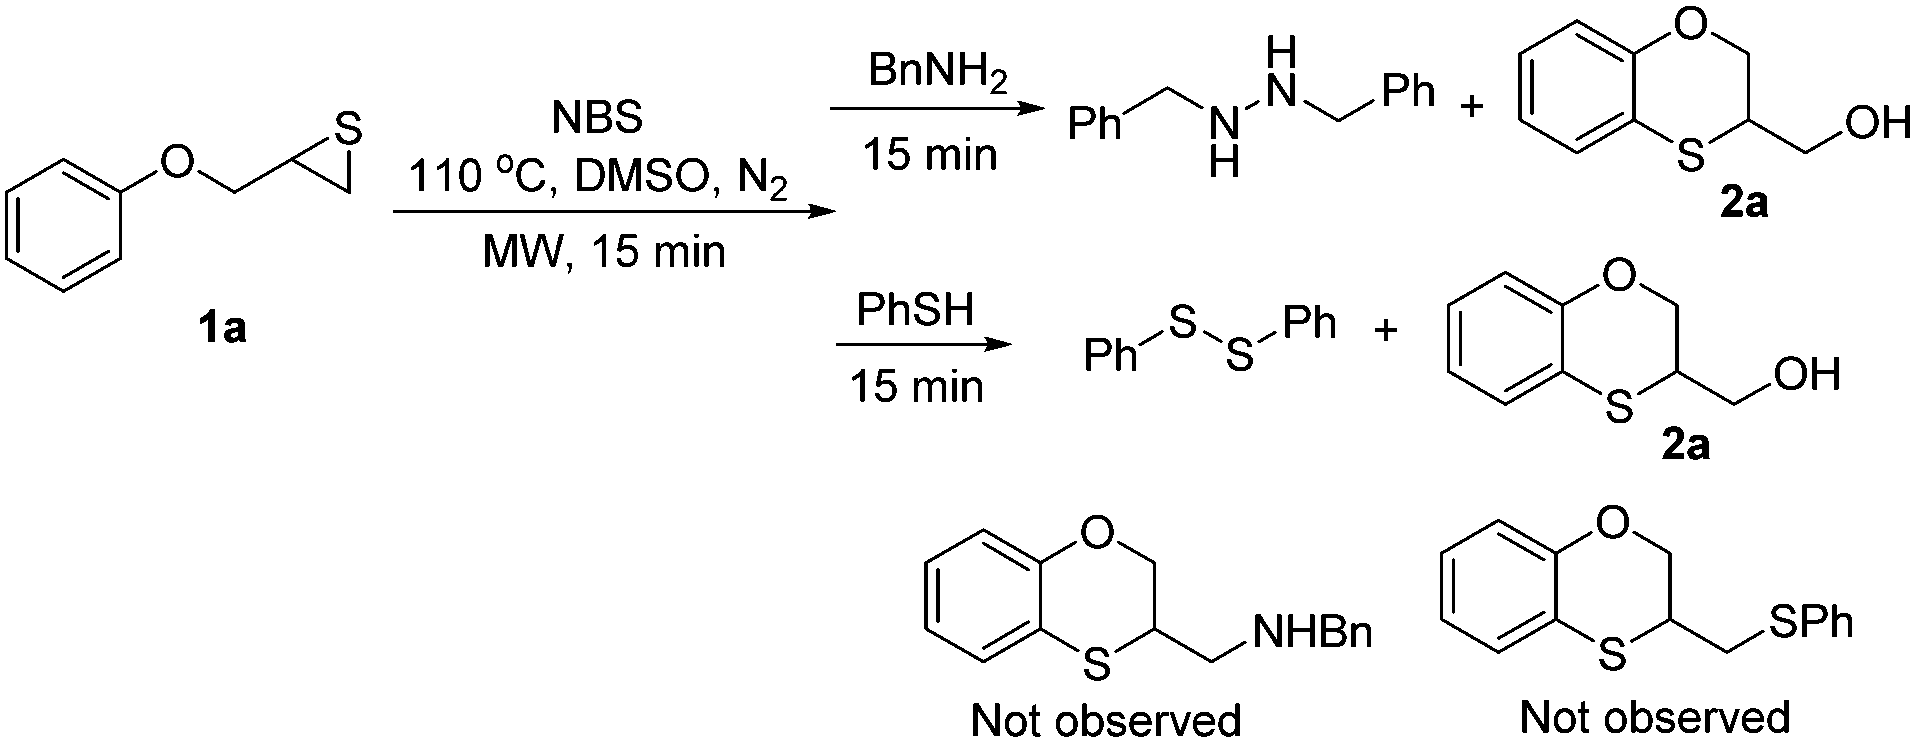 Nbs Dmso Mediated Synthesis Of 2 3 Dihydrobenzo B 1 4 Oxathiin 3 Yl Methanols From Aryloxymethylthiiranes New Journal Of Chemistry Rsc Publishing Doi 10 1039 C8njf